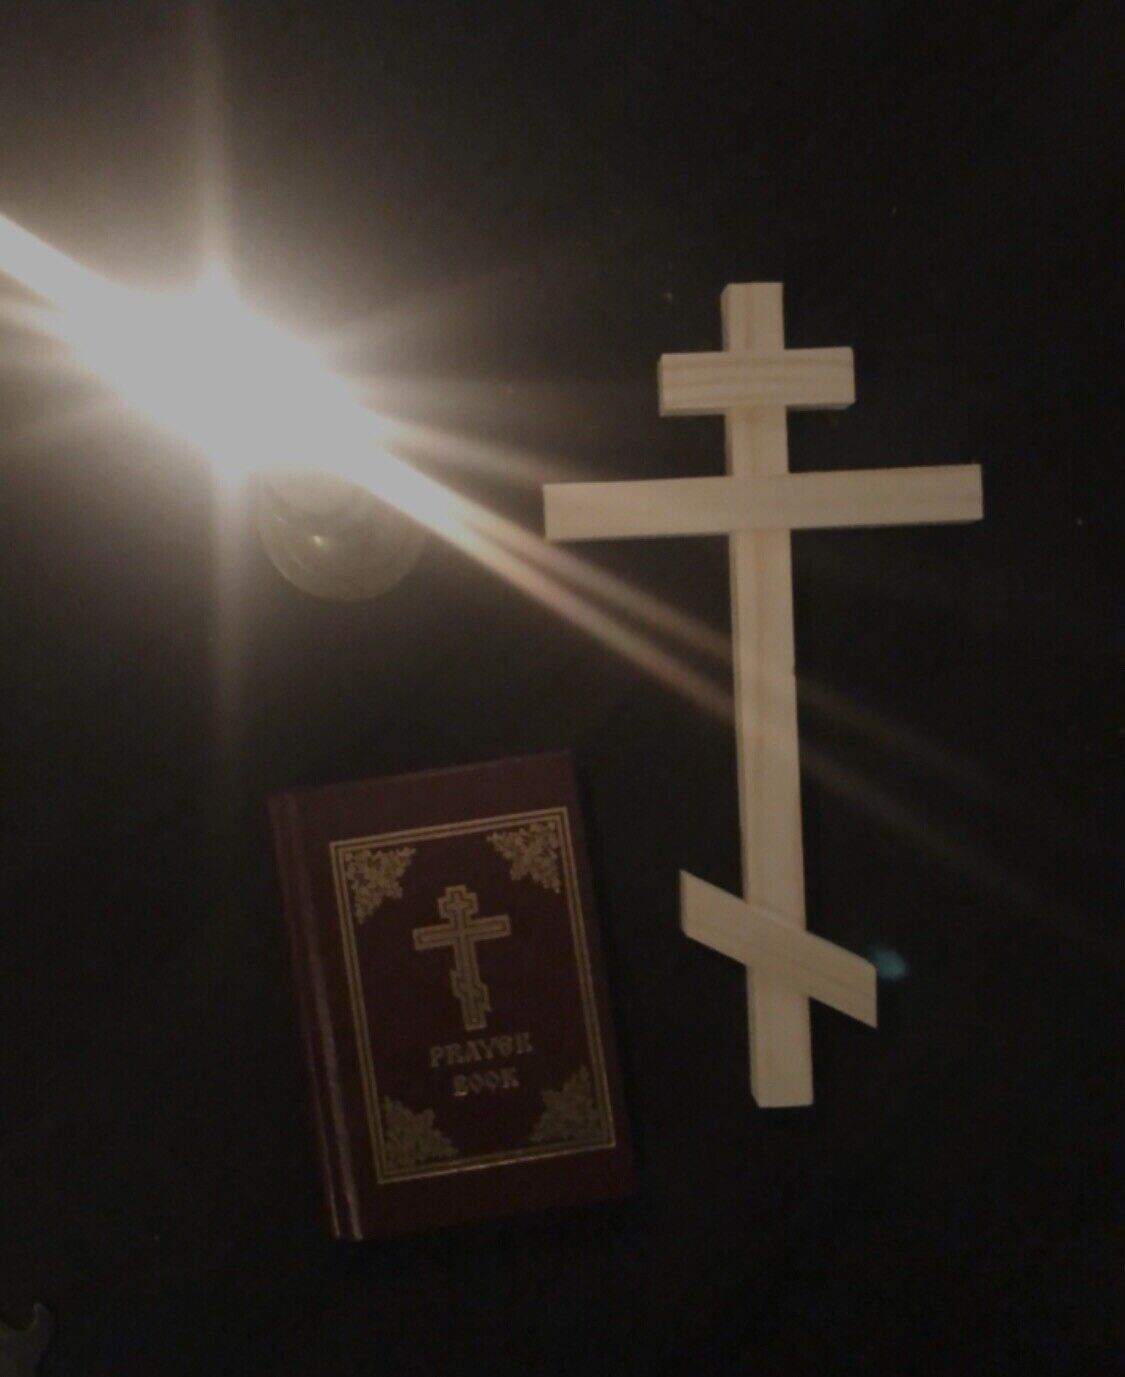 Wooden Orthodox Cross